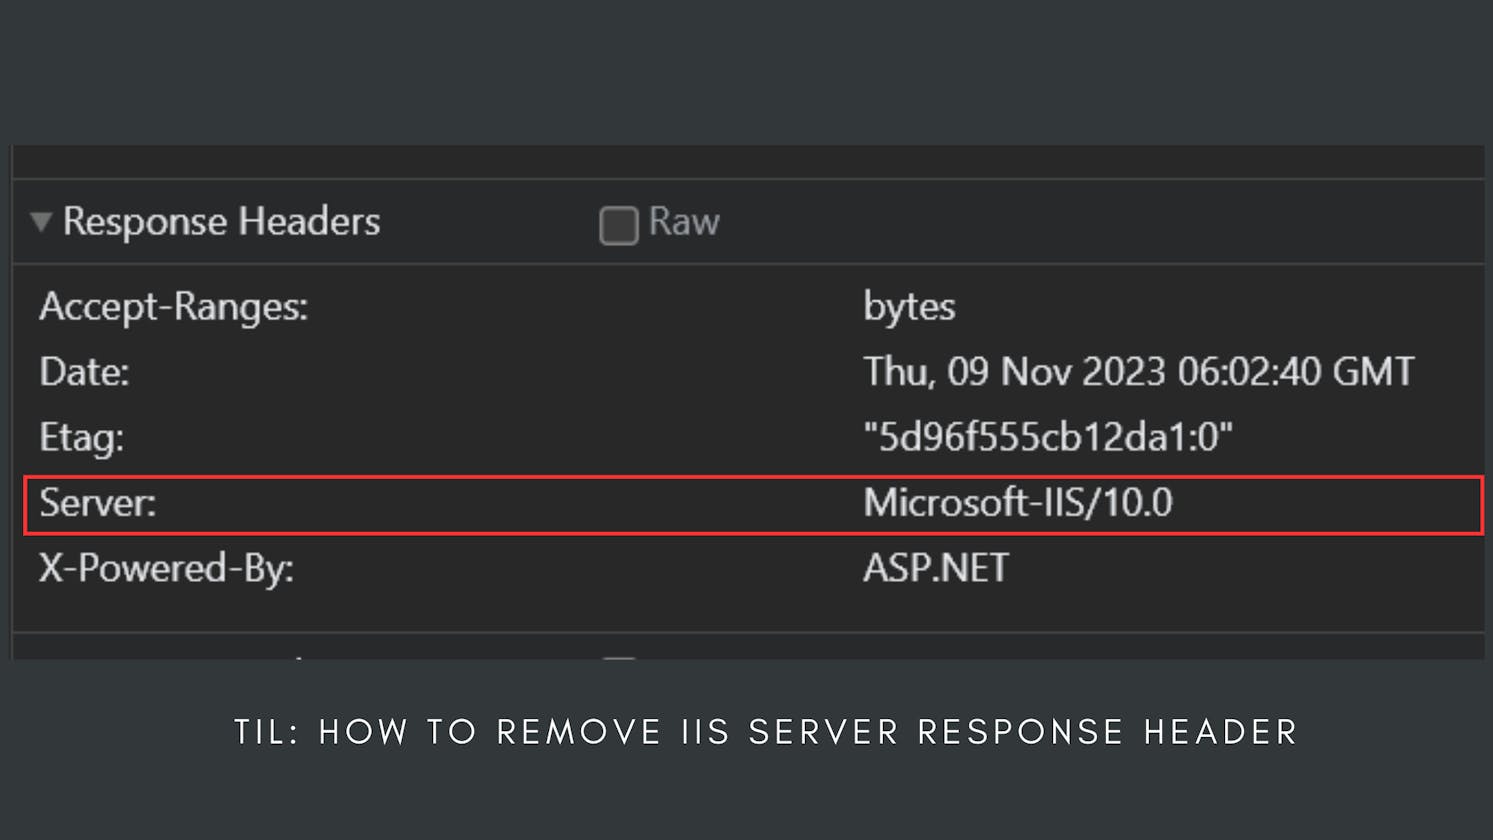 TIL: How to remove IIS server response header